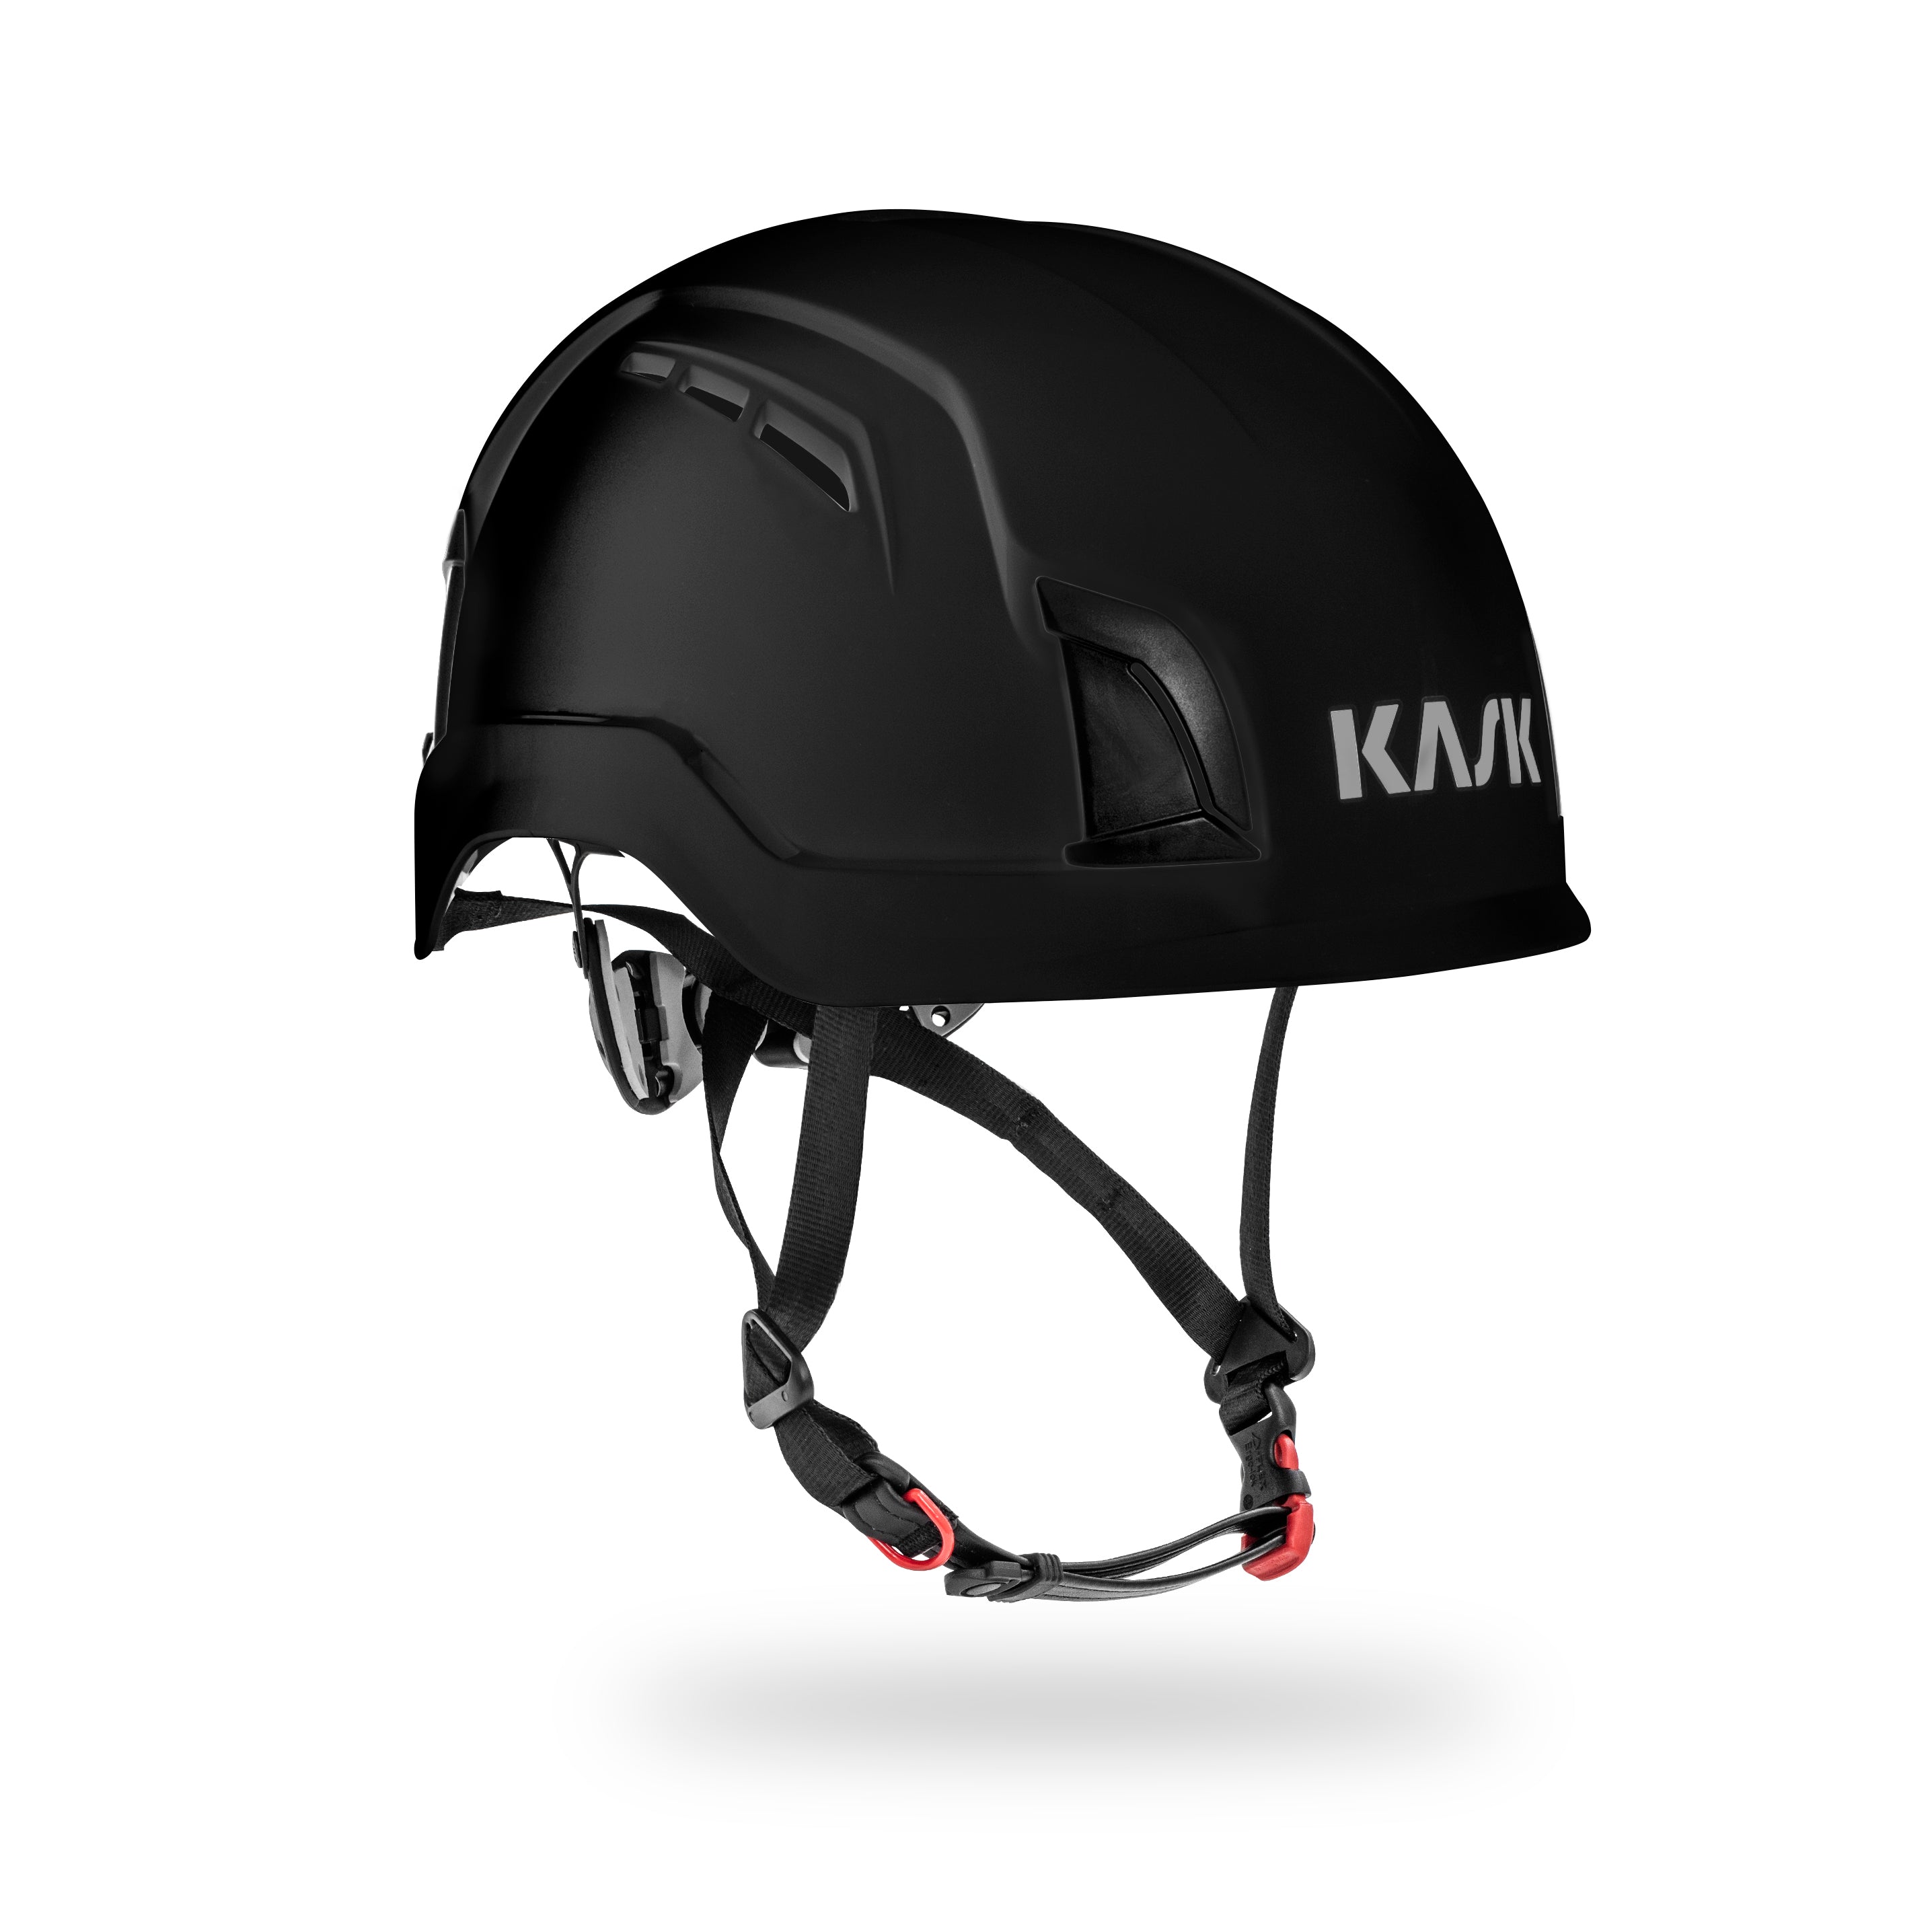 WHE00027 KASK Zenith PL Helmet - EN 12492